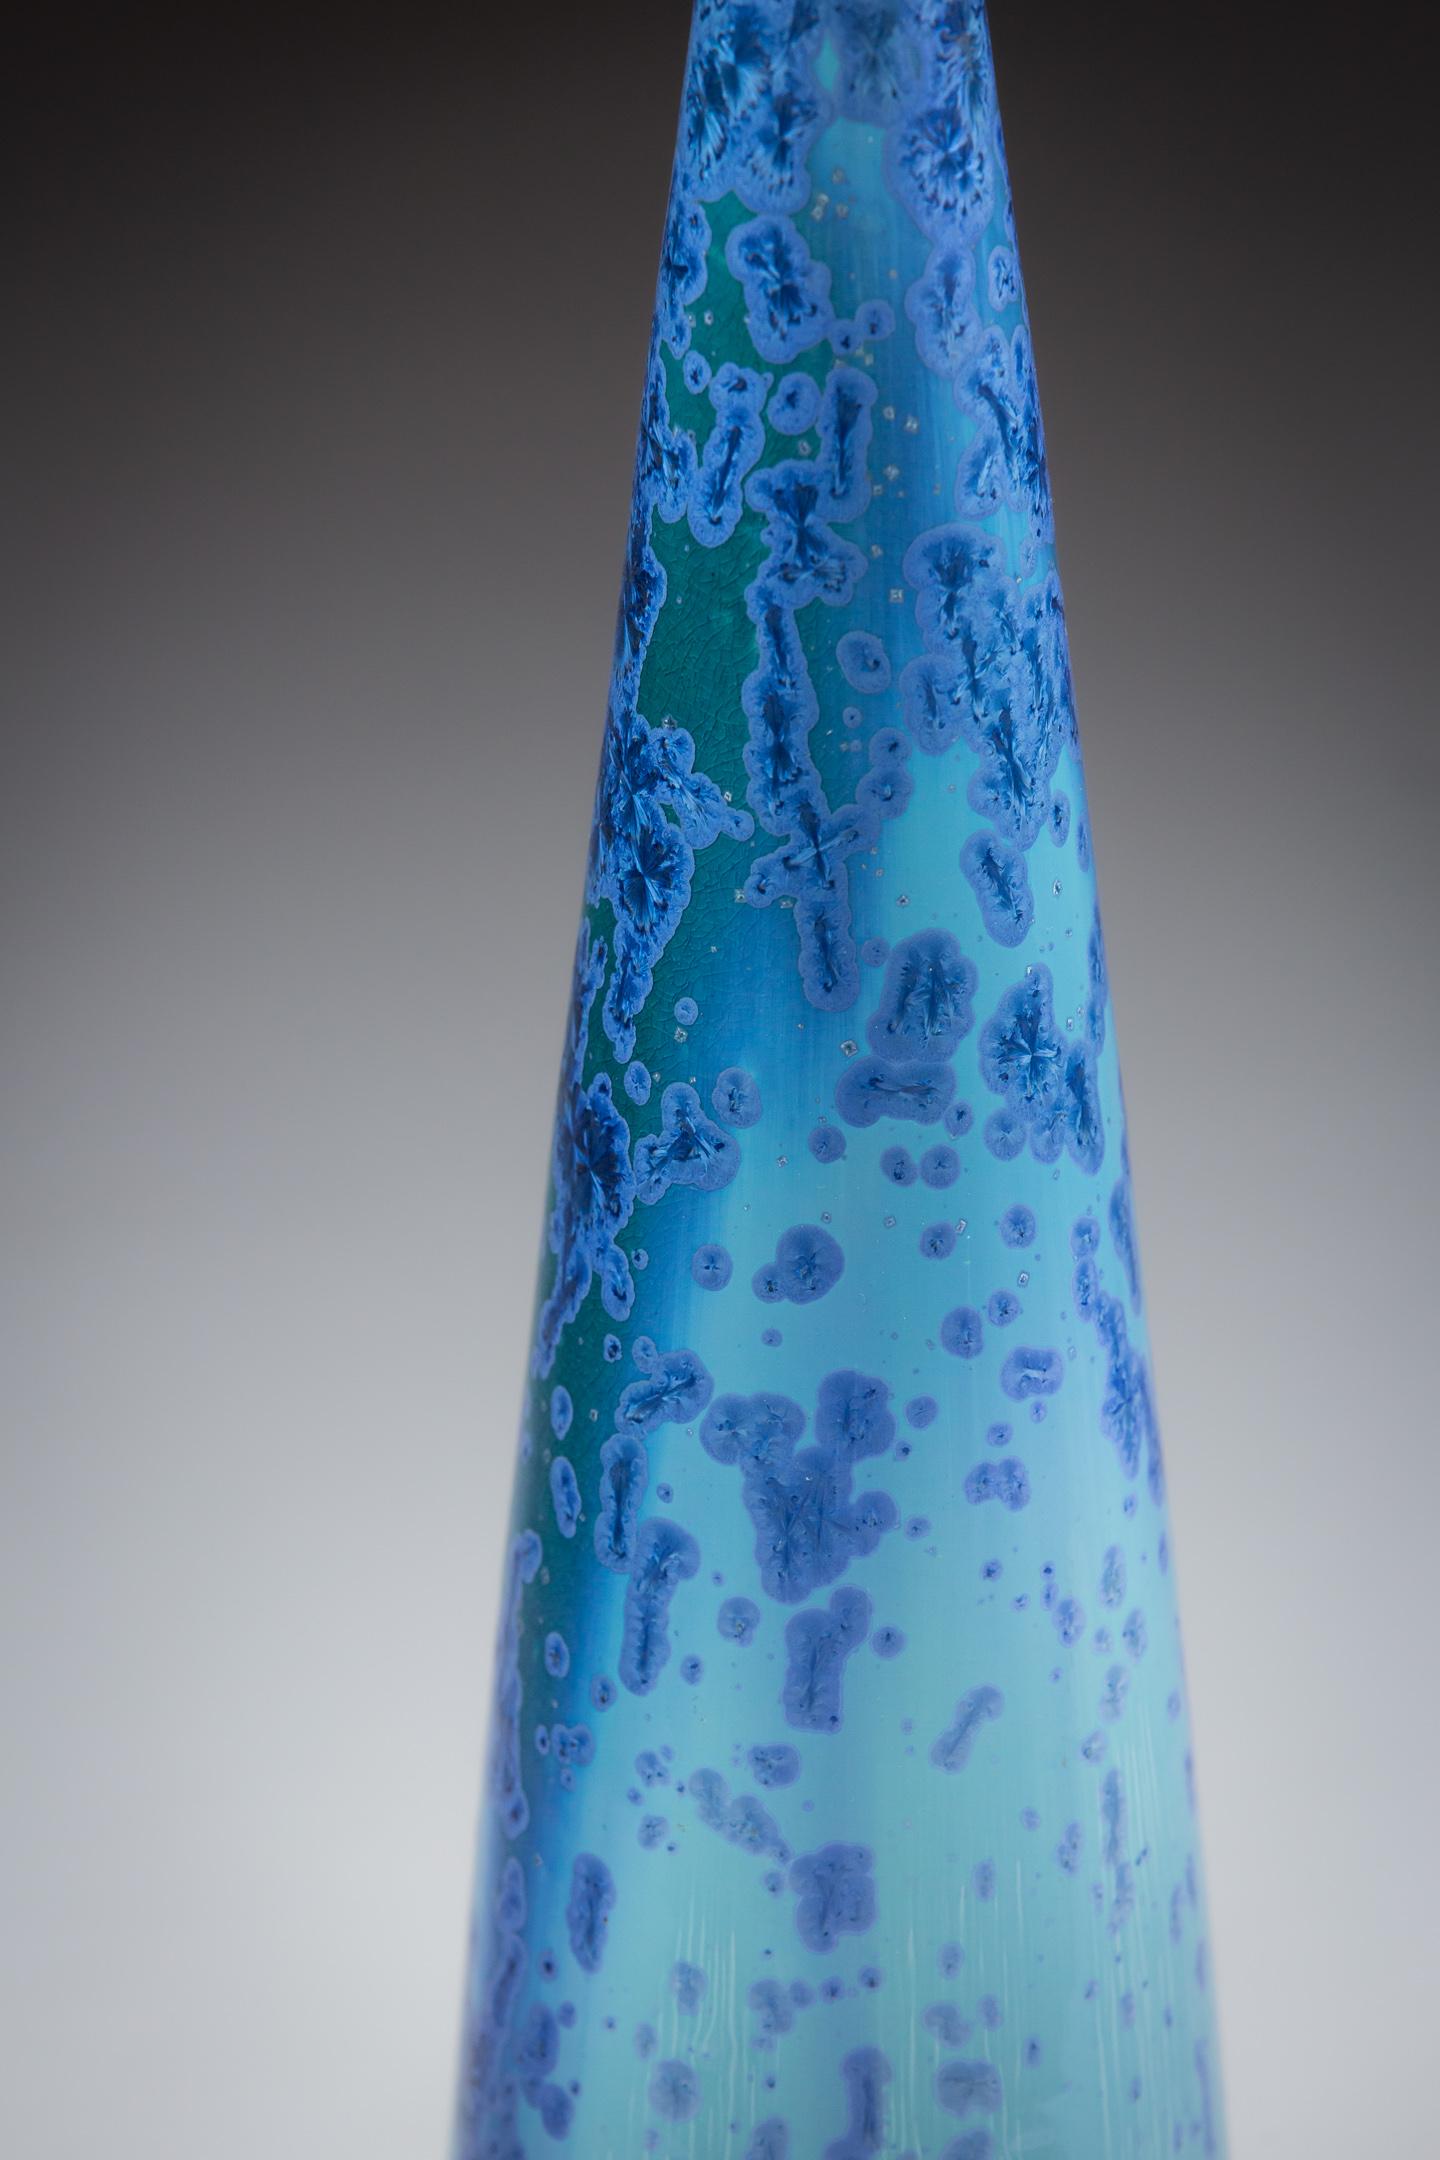 Extraordinaire vase de Studio Pottery bleu glacé en guise de lampe en vente 1